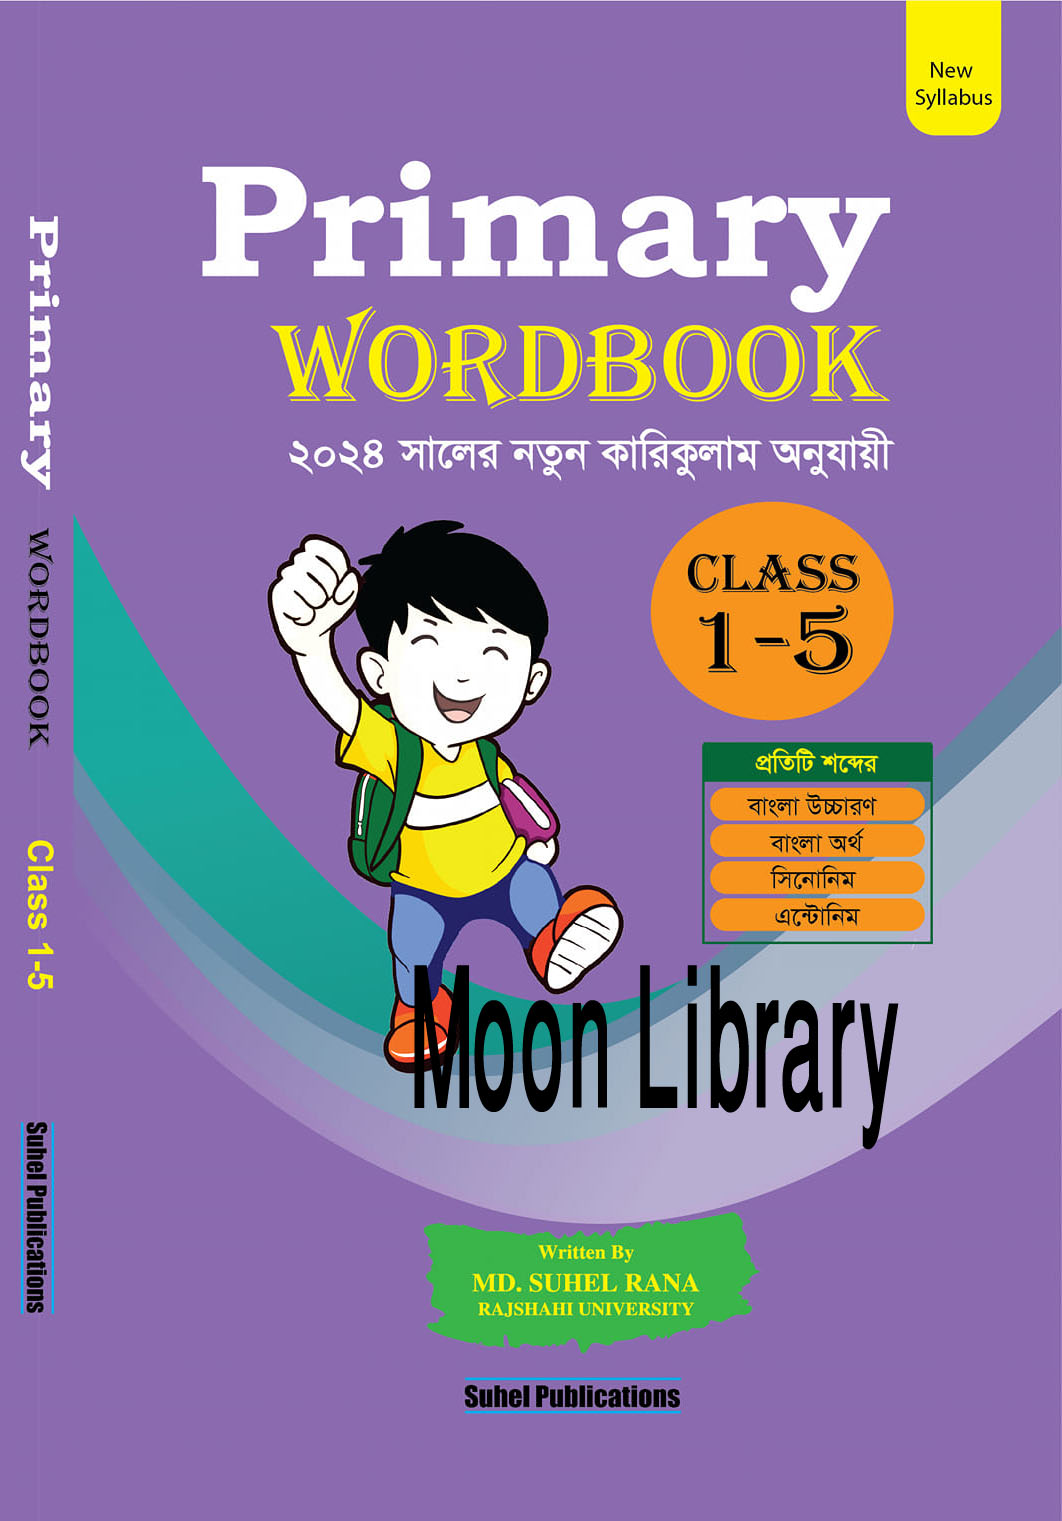 TextBook Vocabulary Class 1-5 / Primary WordBook